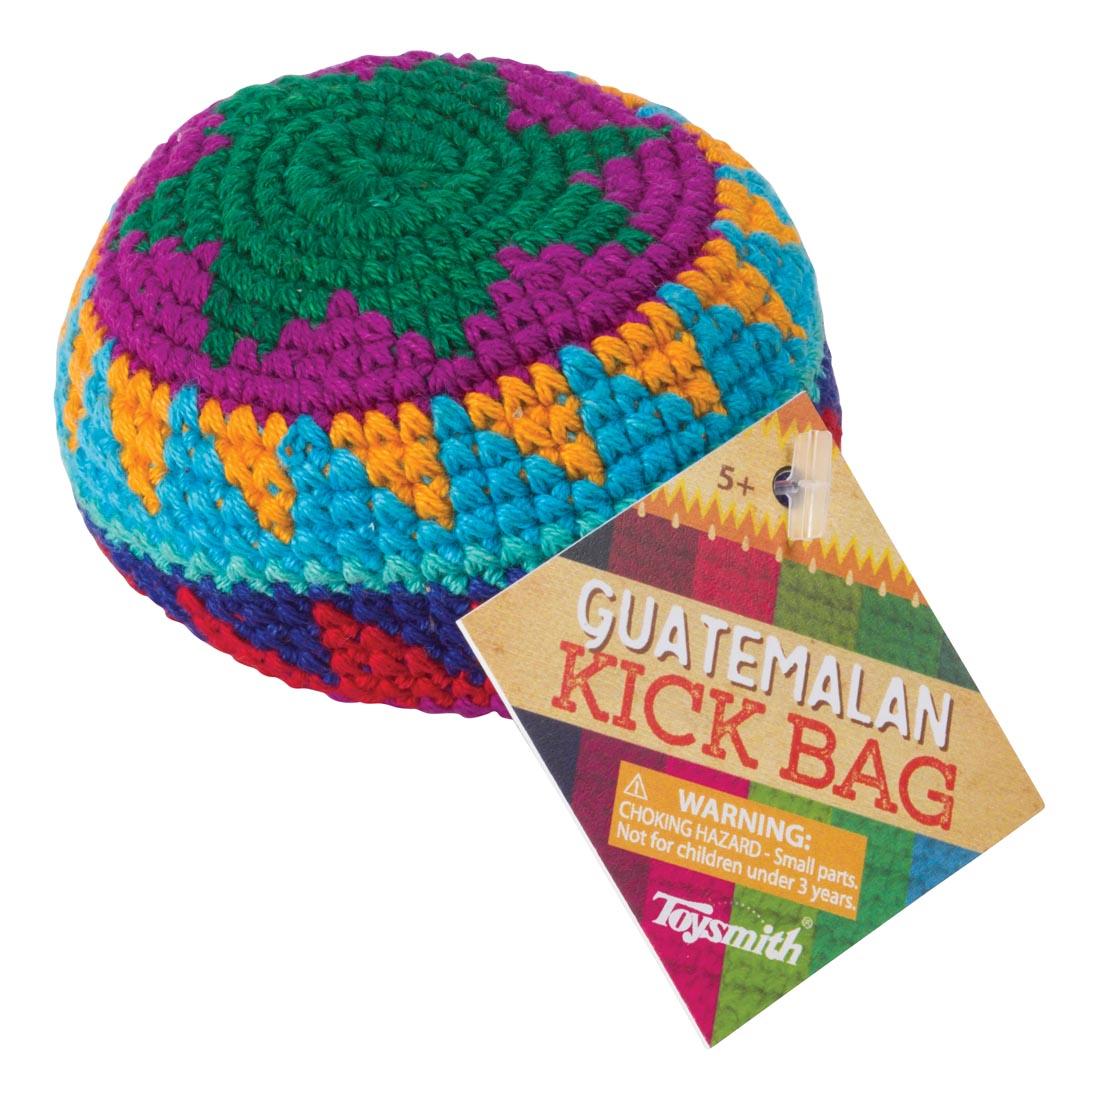 Guatemalan Kick Bag By Toysmith